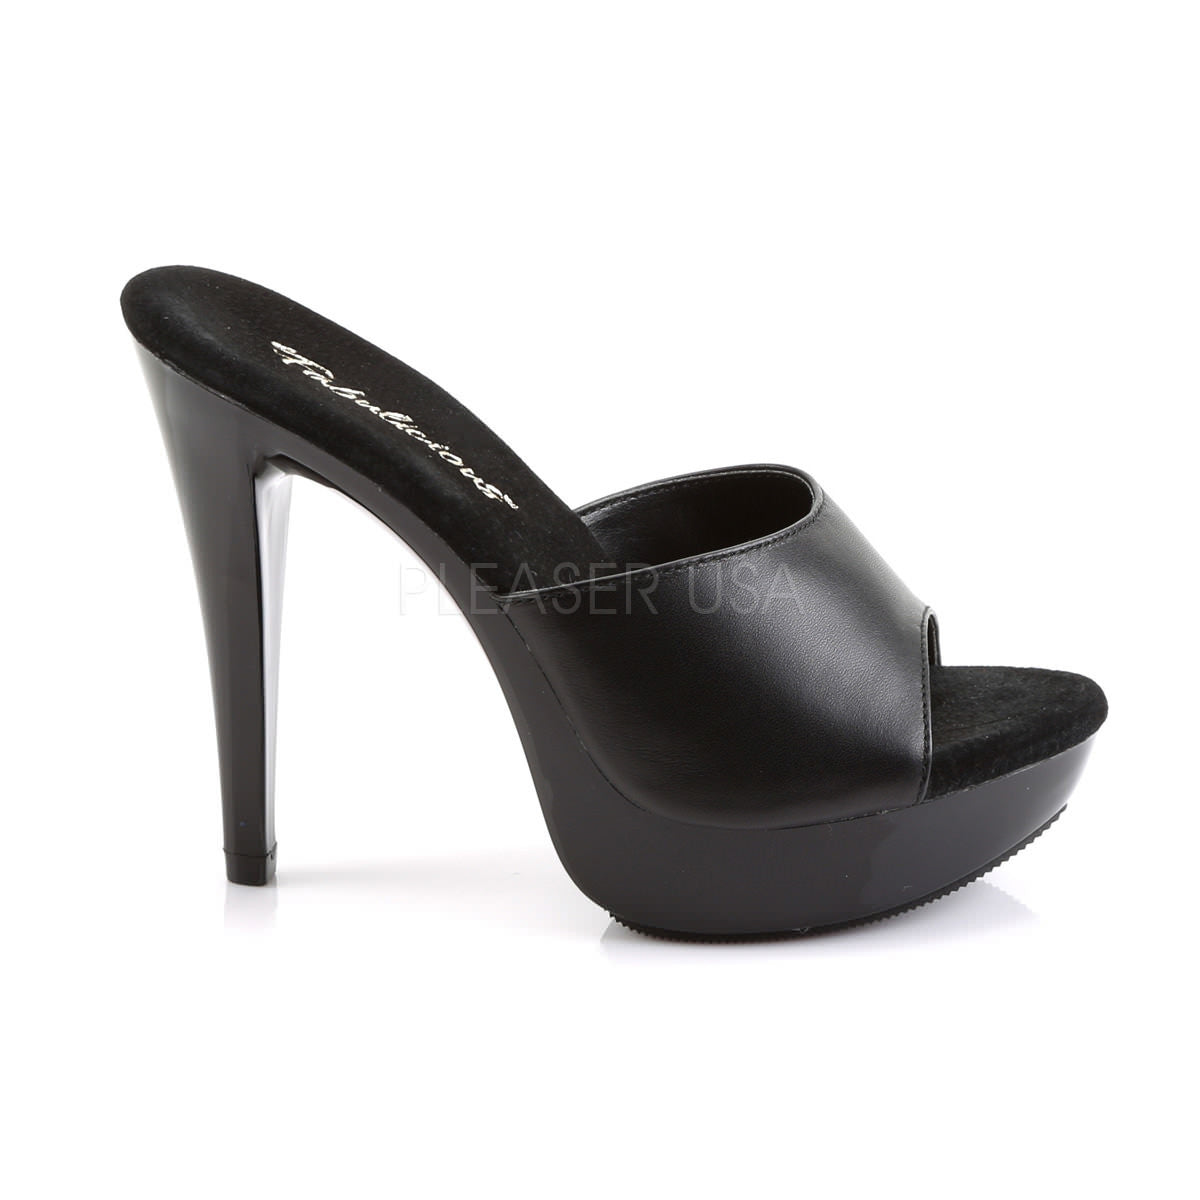 5 Inch Heel COCKTAIL-501L Black Leather